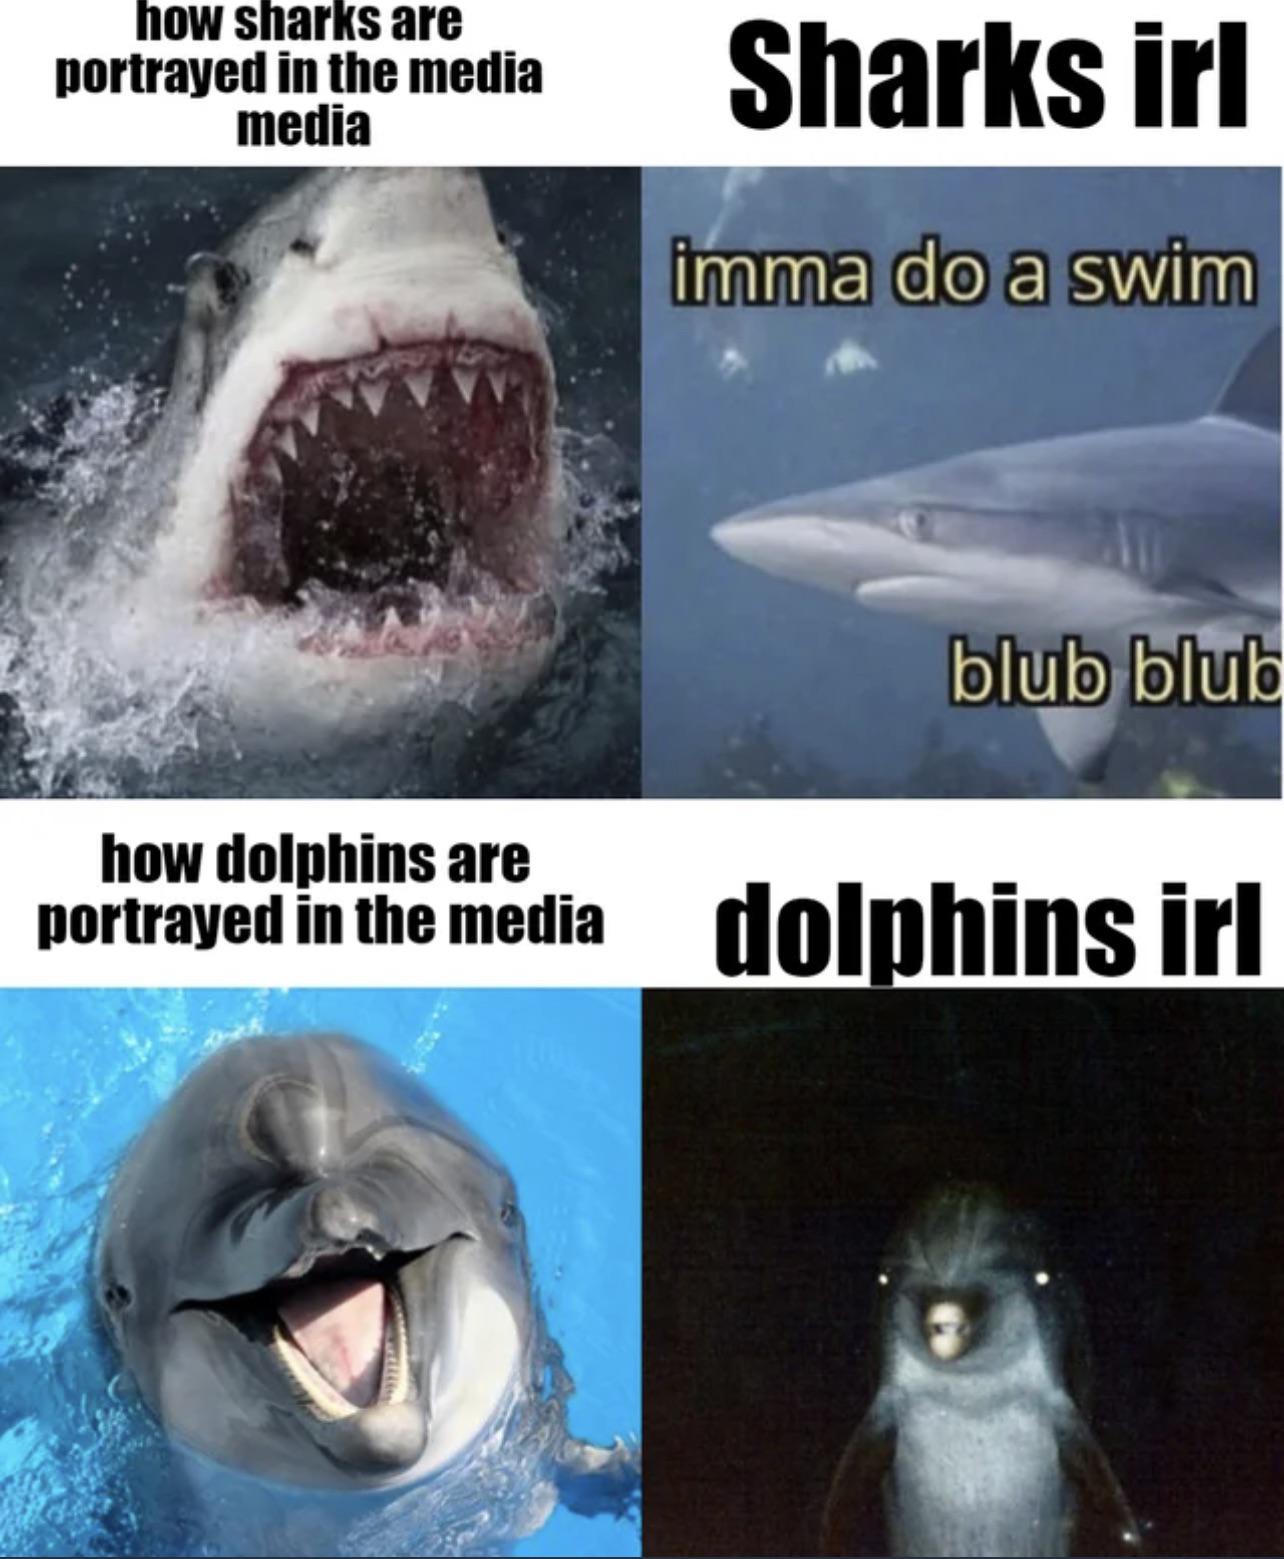 dank memes - funny memes - dolphins vs sharks meme - how sharks are portrayed in the media media Sharks irl imma do a swim blub blub how dolphins are portrayed in the media dolphins irl